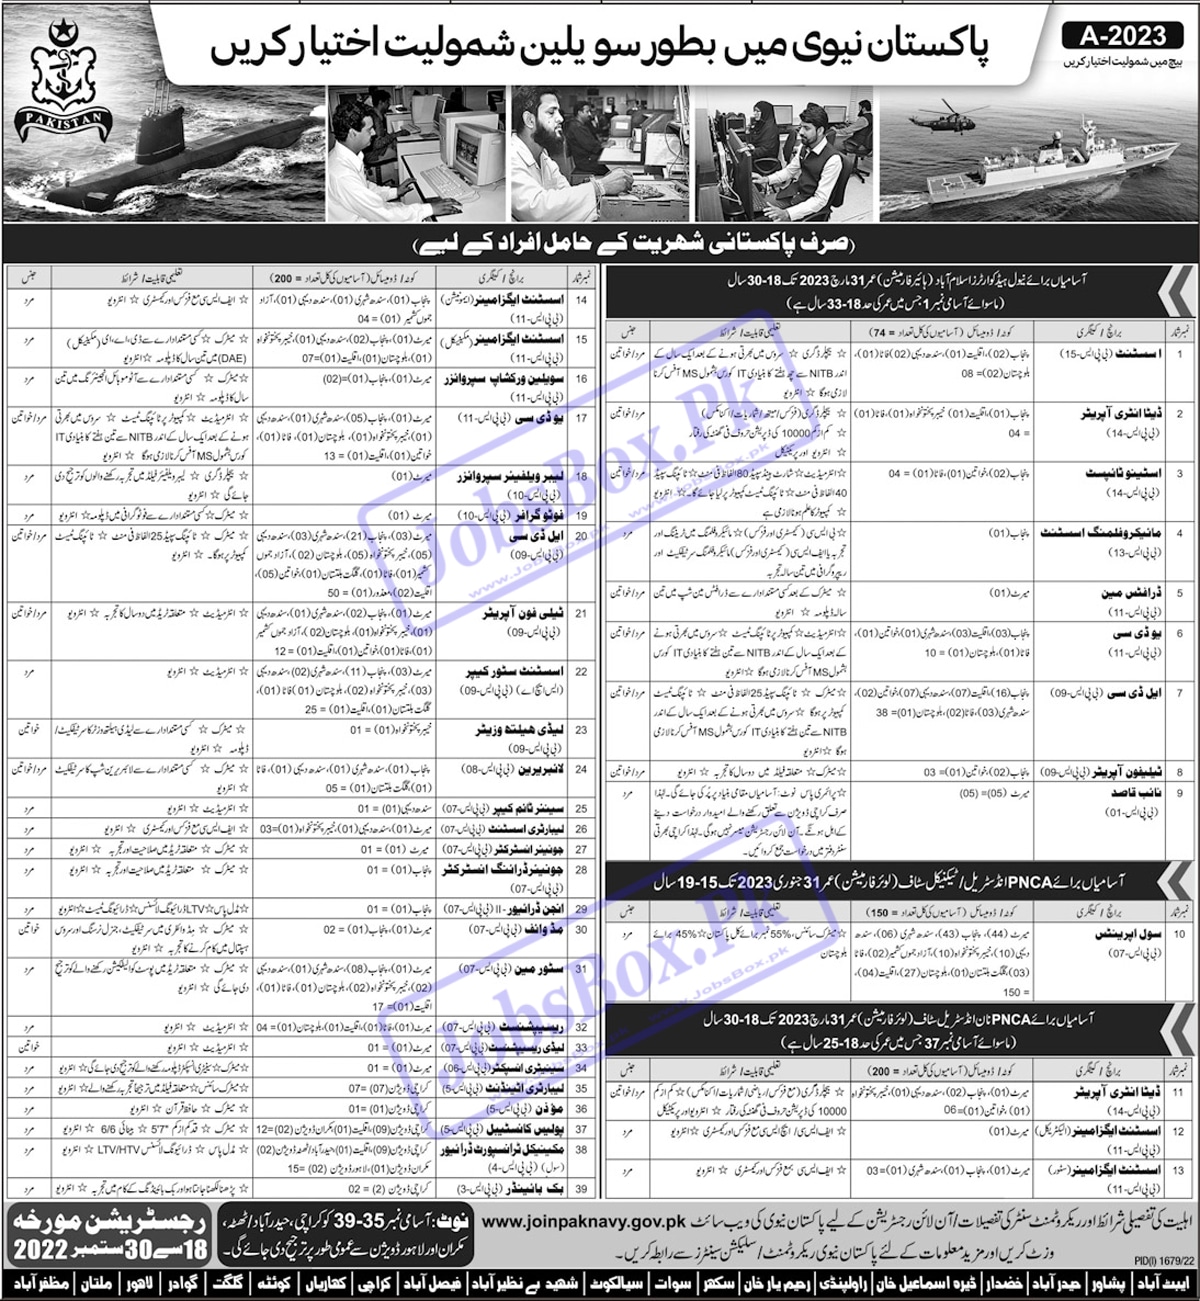 Pakistan Navy Civilian Jobs 2022 Batch A-2023 Advertisement